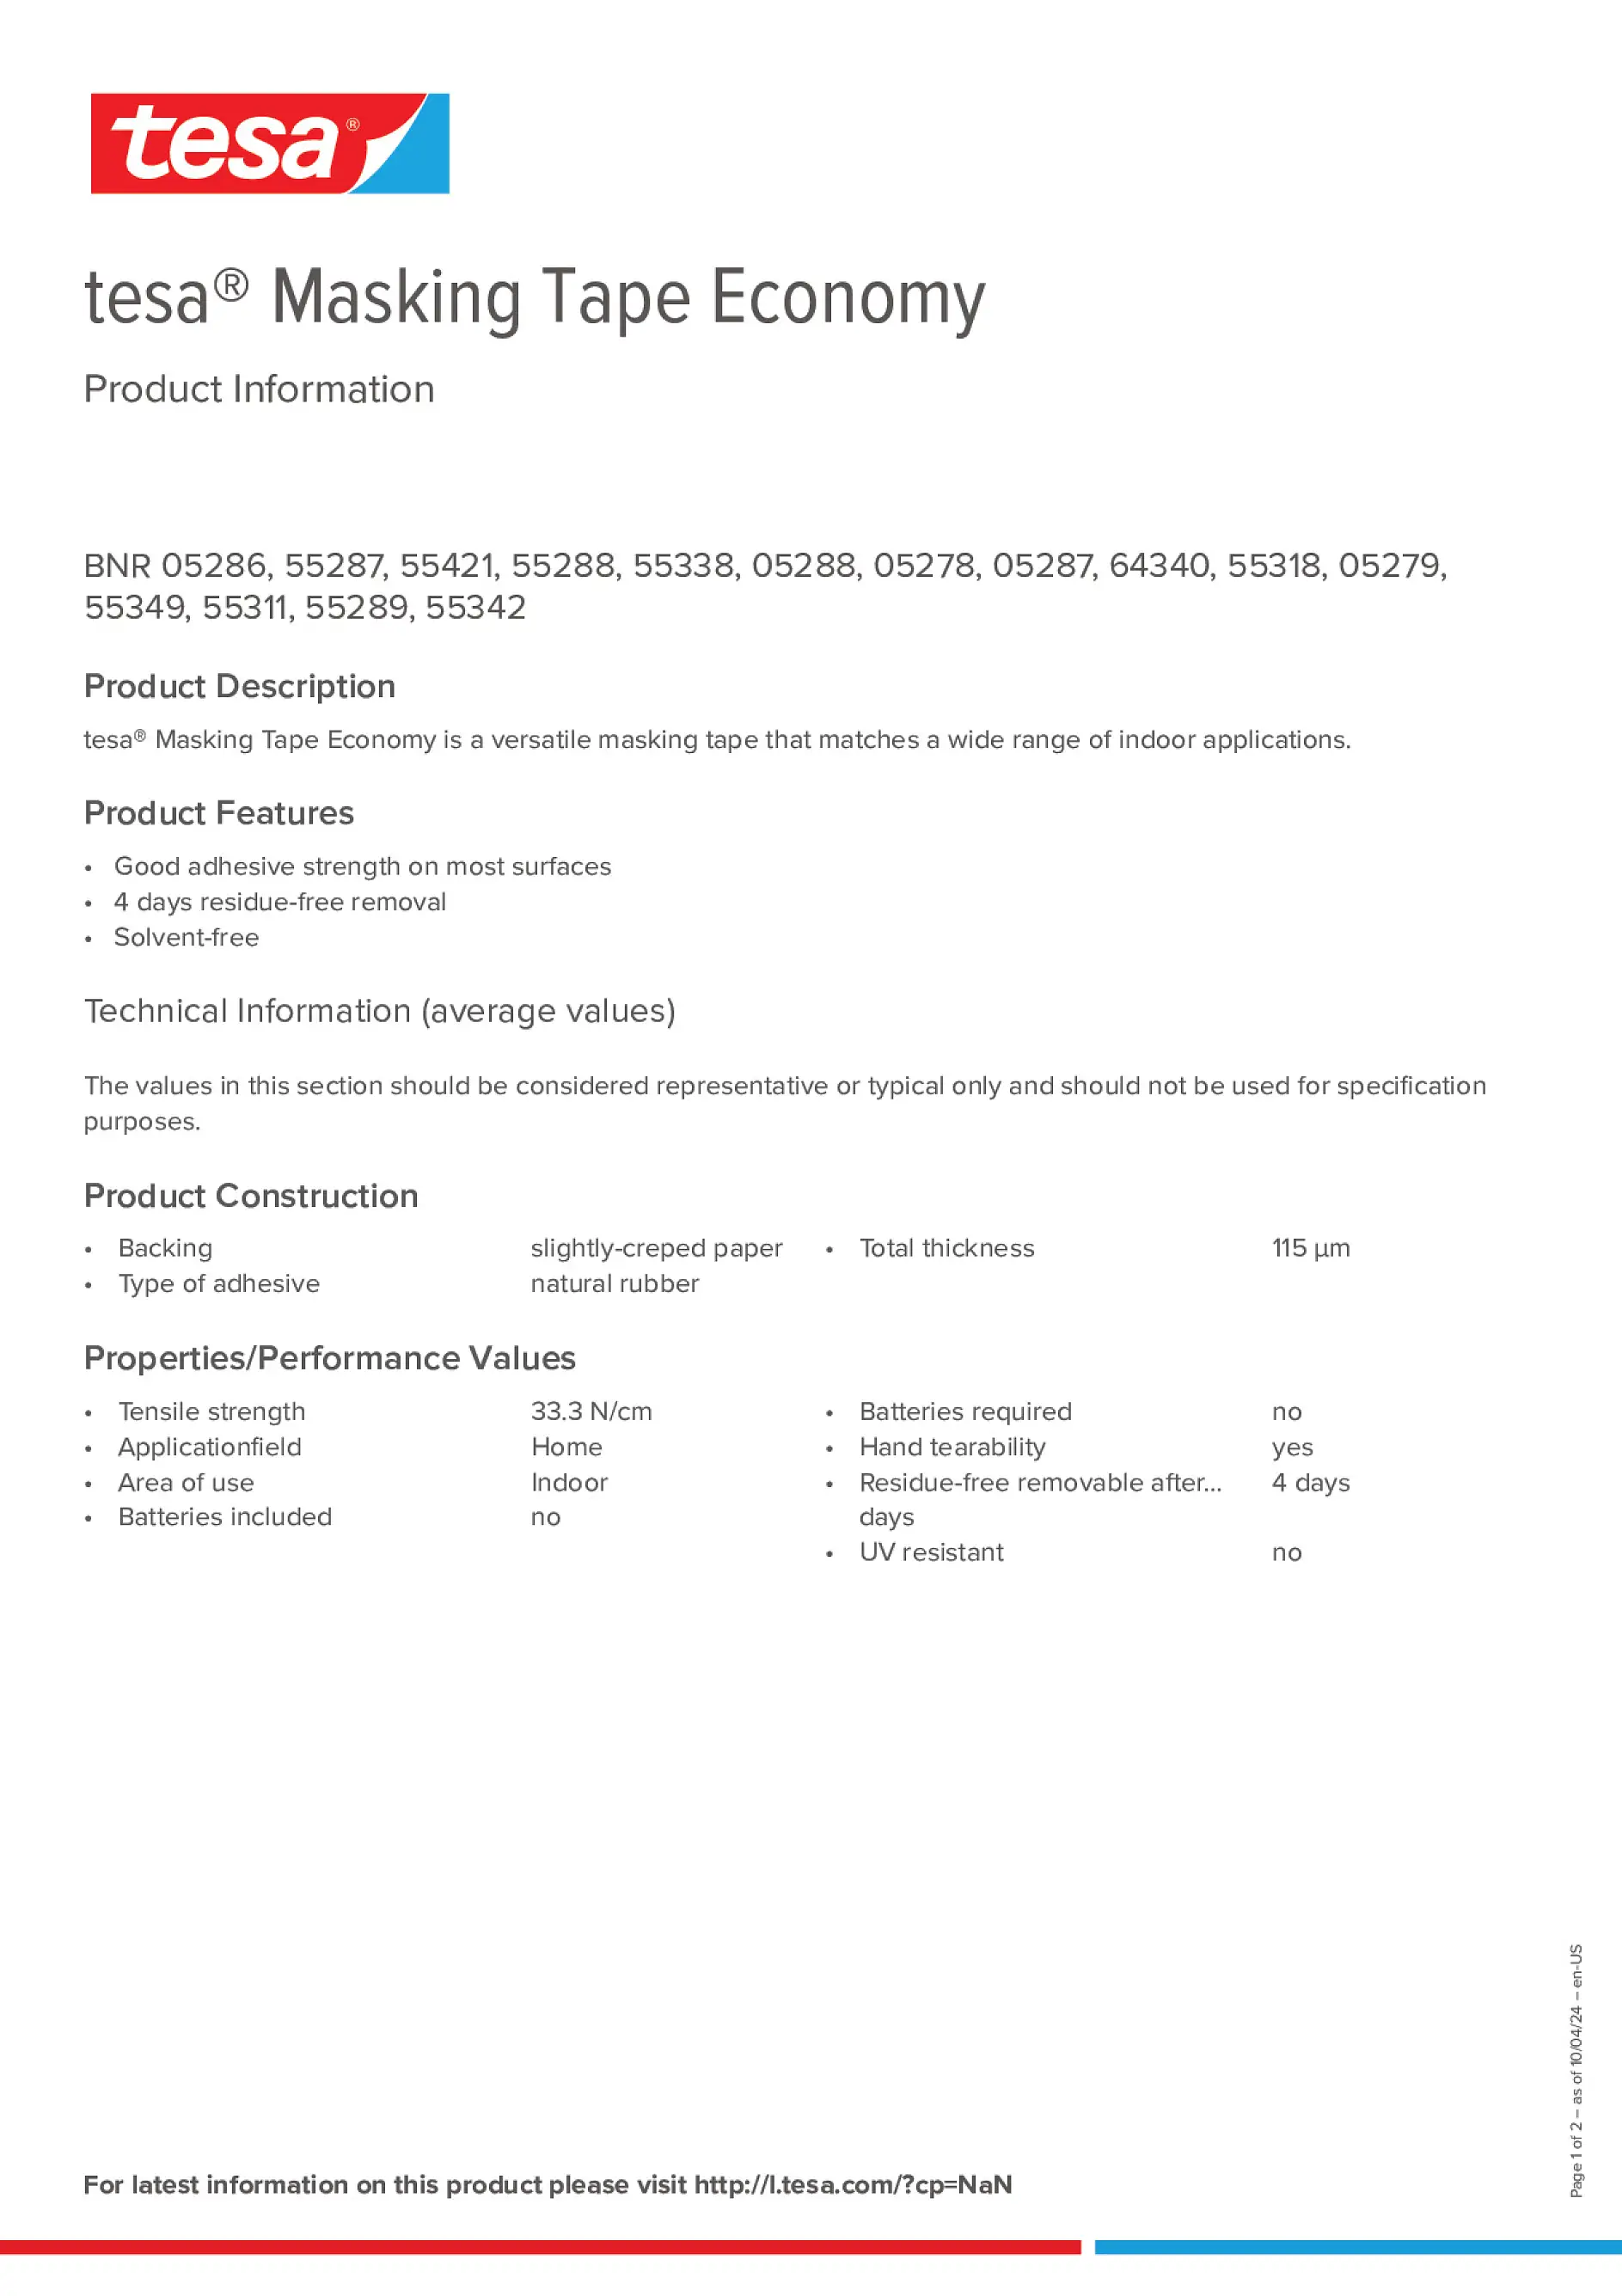 Product information_tesa® 55287_en